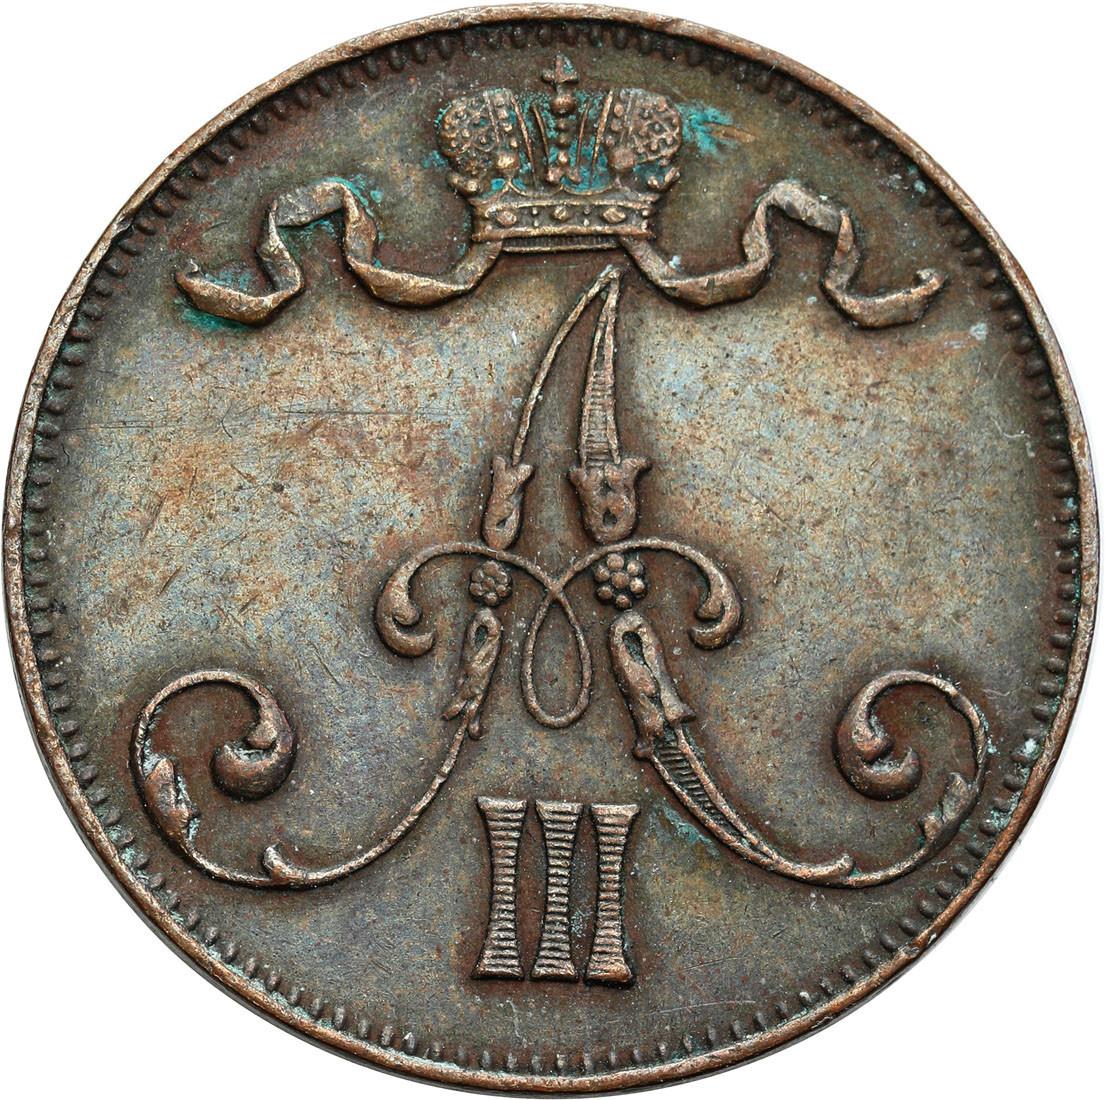 Rosja / Finlandia. Aleksander III. 5 pennia 1888 - RZADKIE